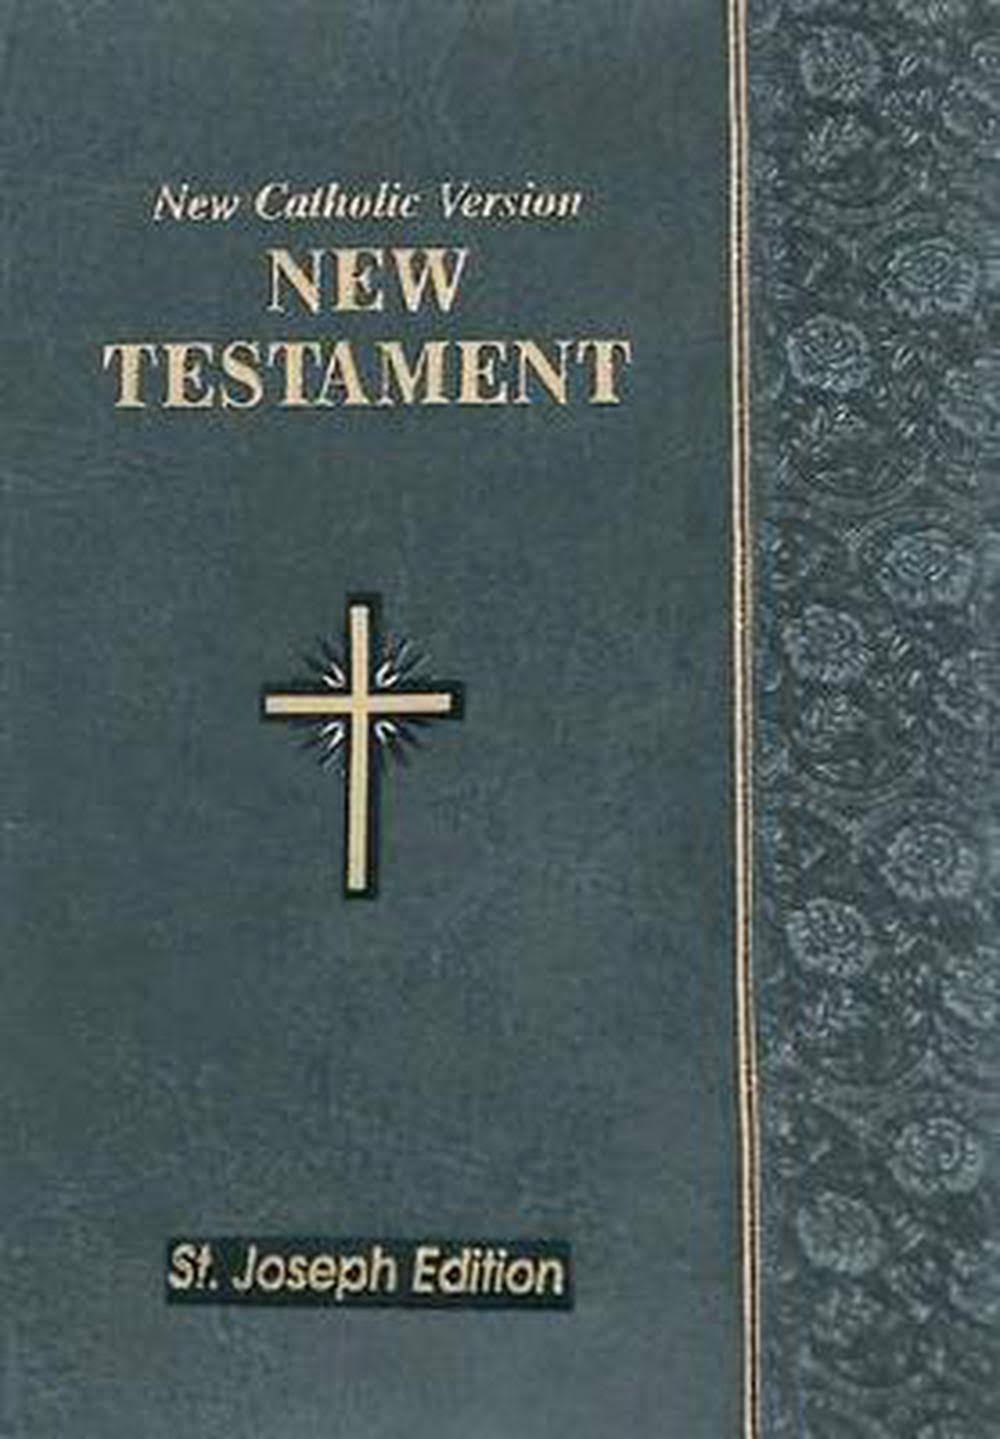 New Testament OE St Joseph: New Catholic Version - Catholic Book Publishing Corp